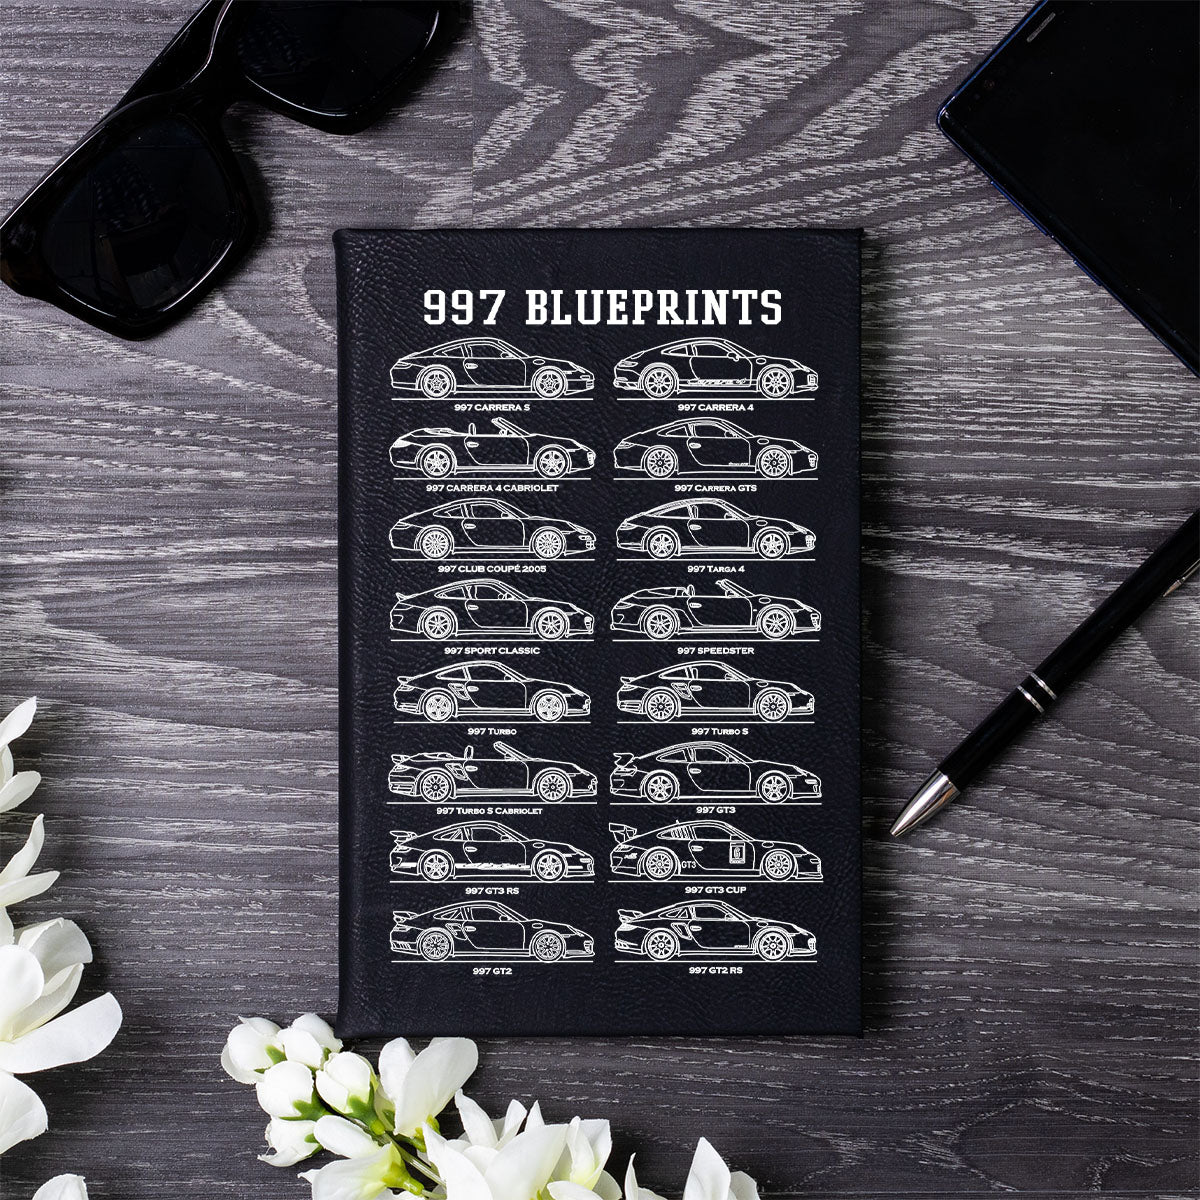 911 Blueprints Art A5 Leather Journal